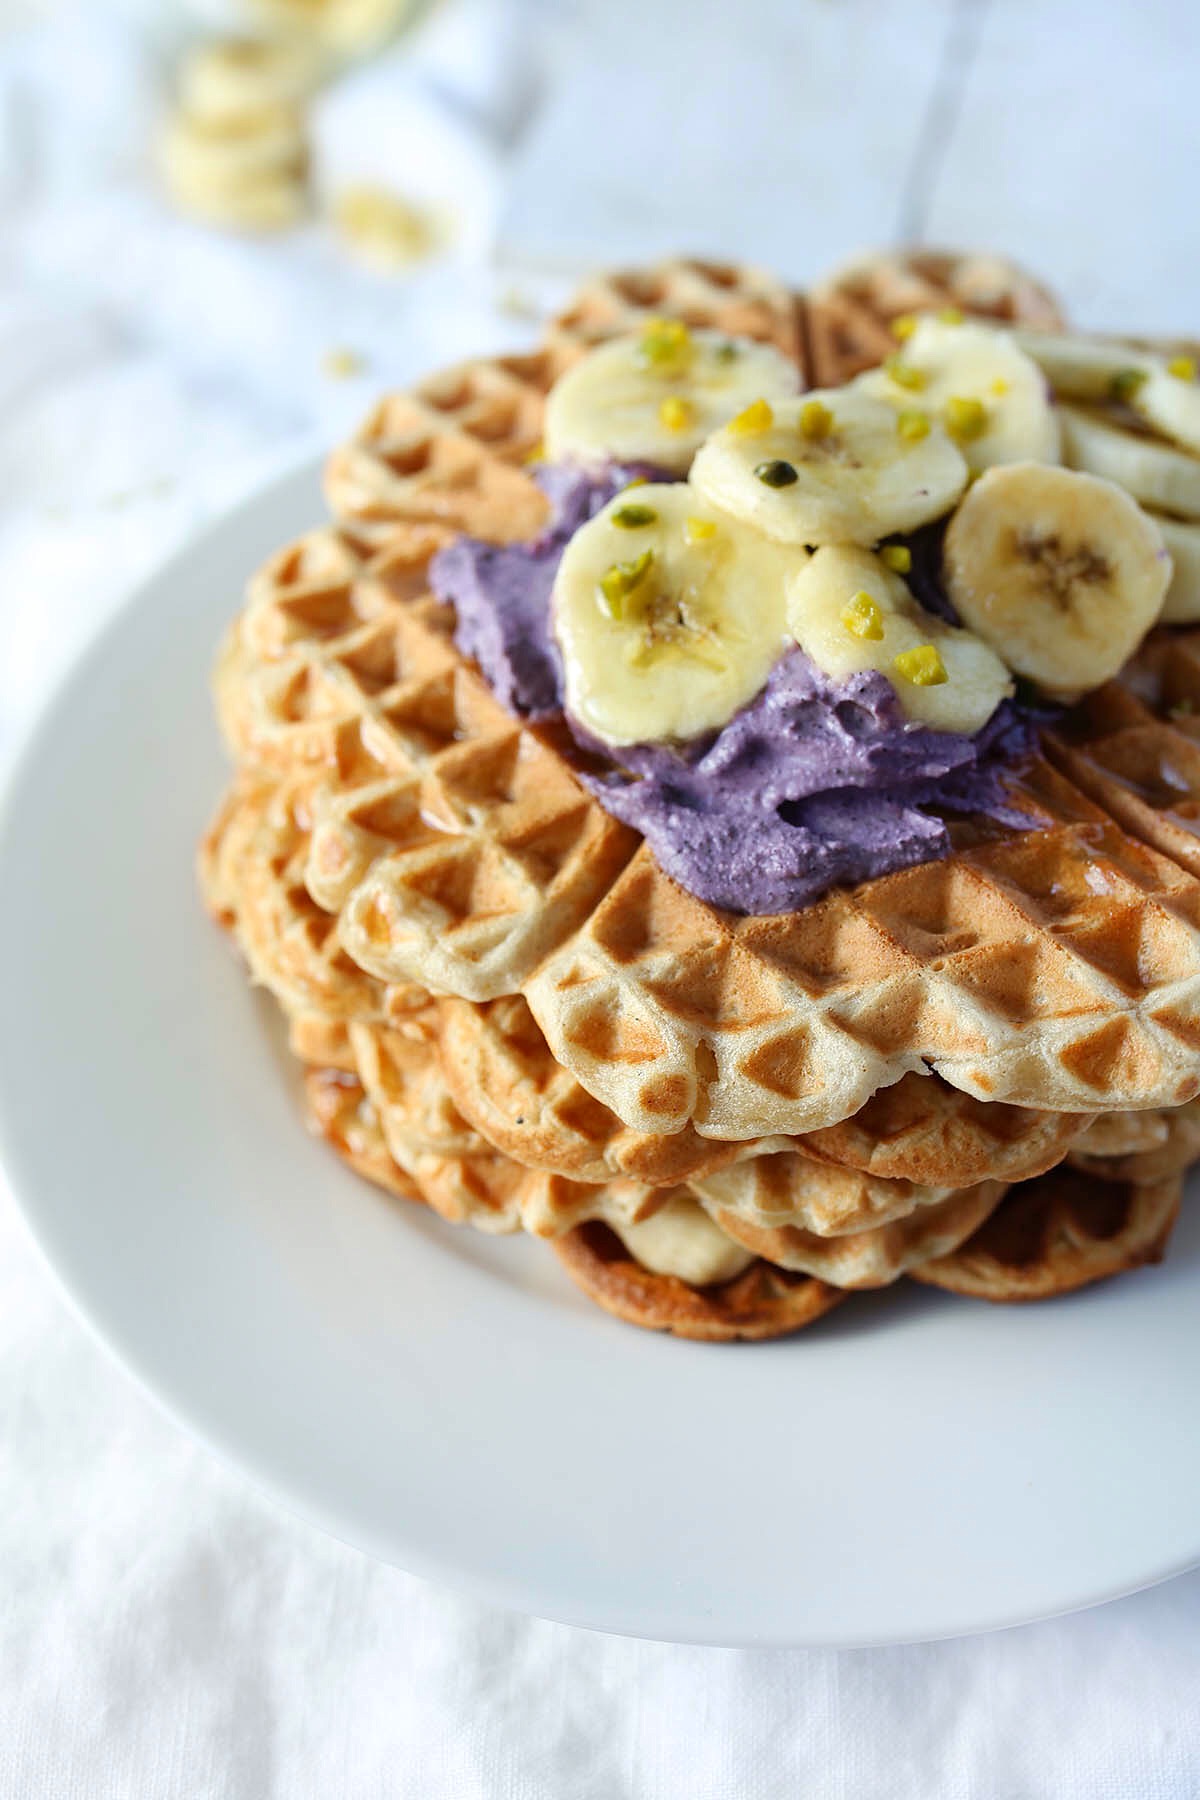 Easy vegan gluten-free Waffles with an antioxidant blueberry cream